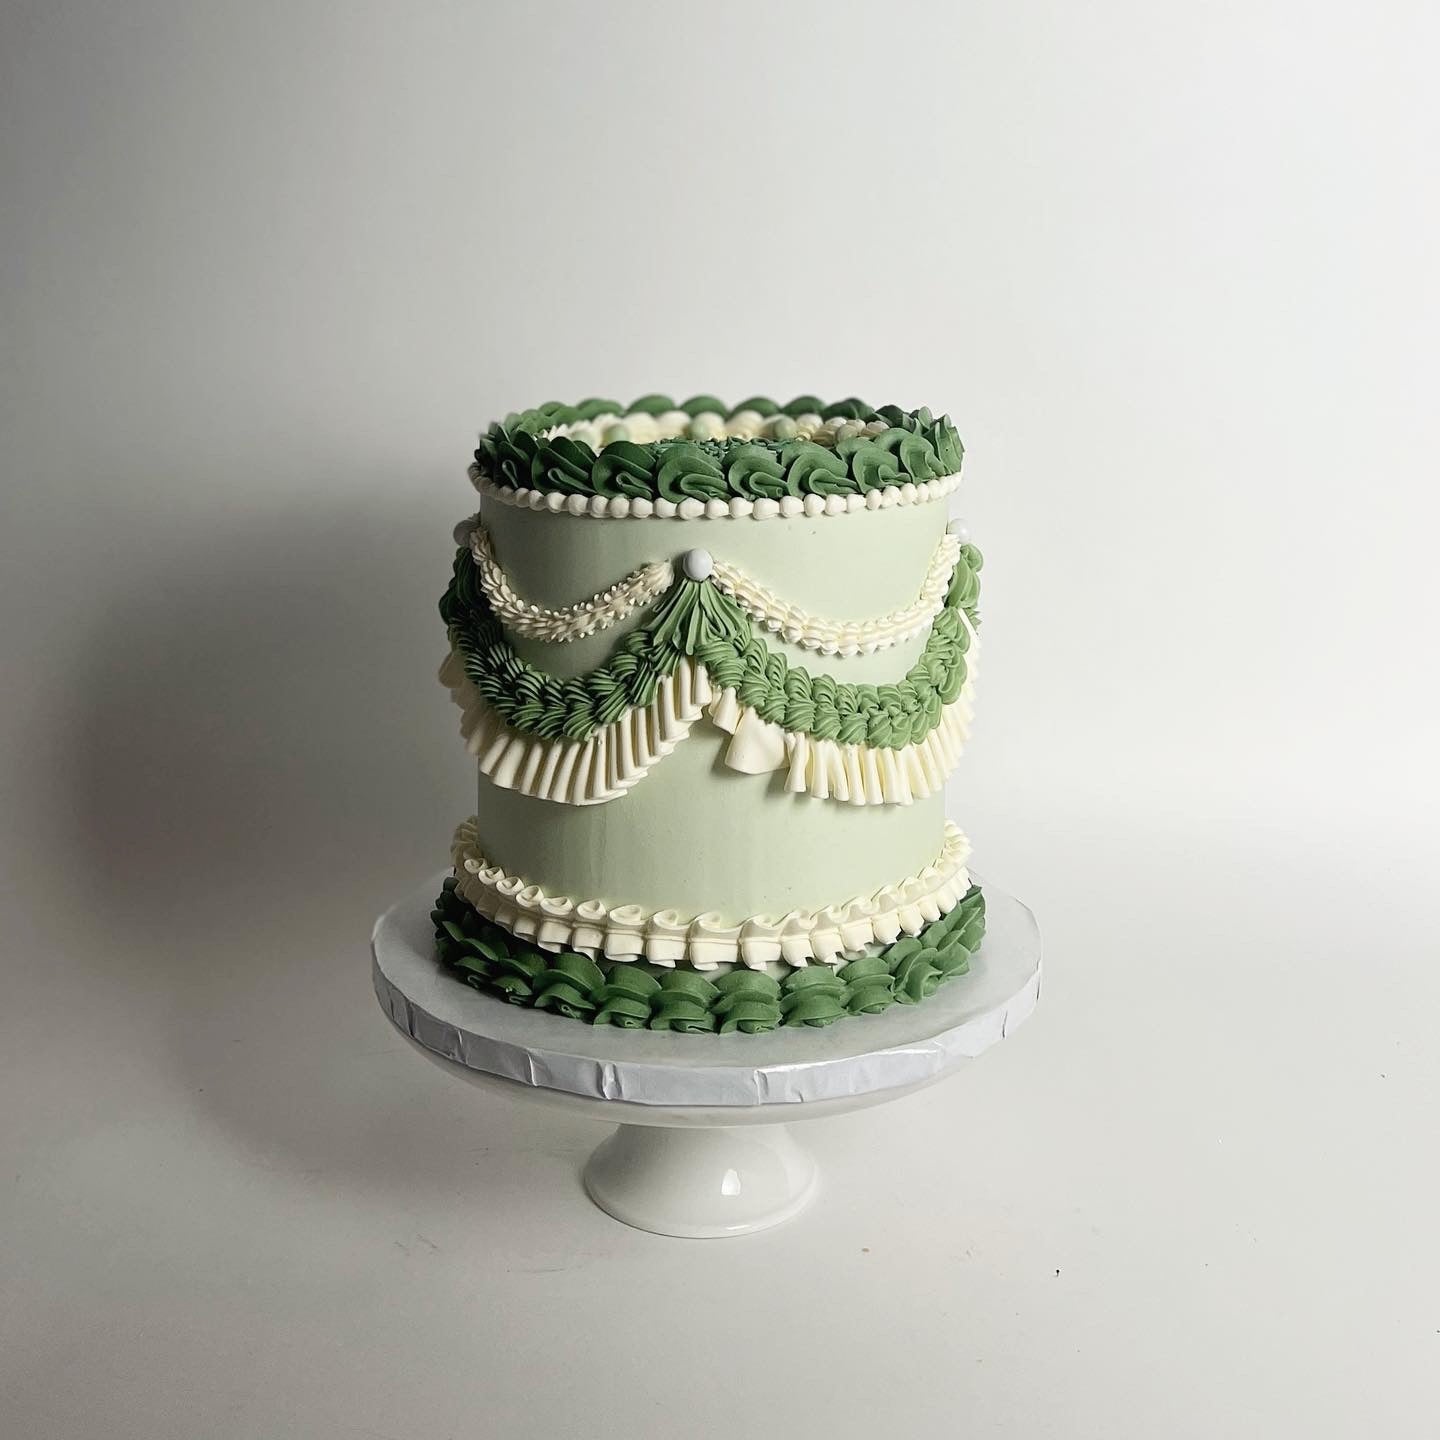 Lambeth Style cake